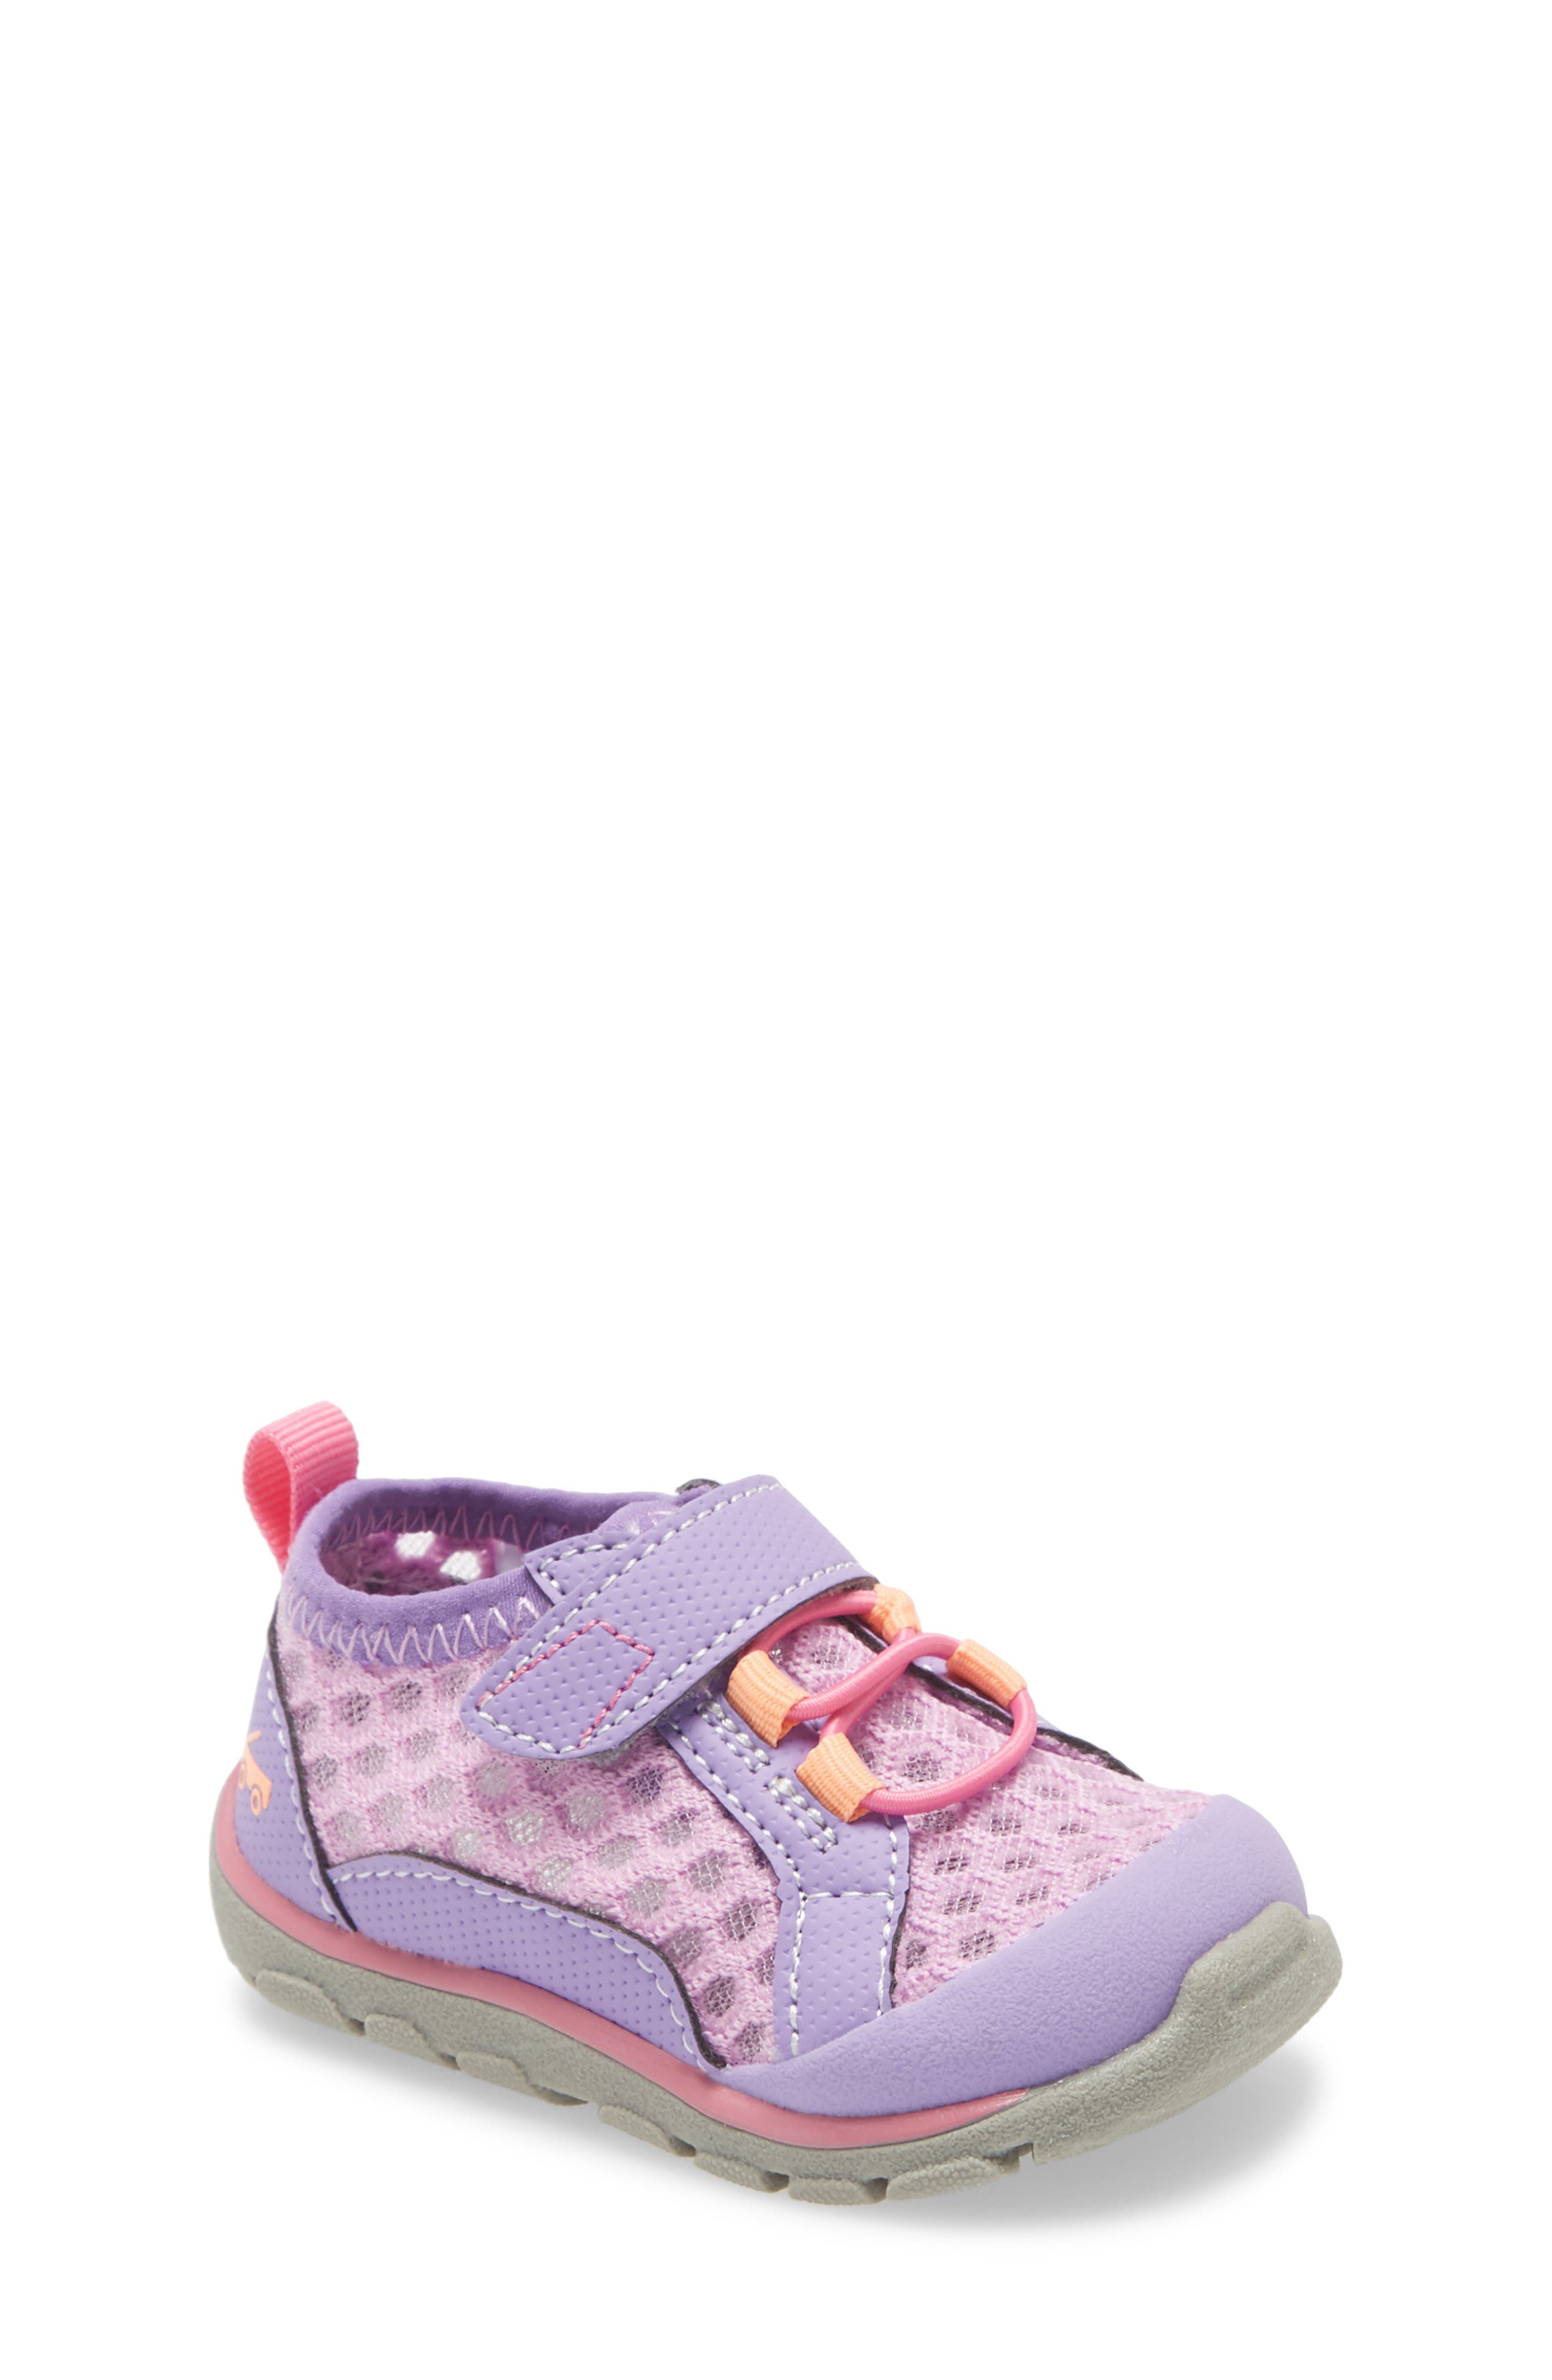 apma baby shoes